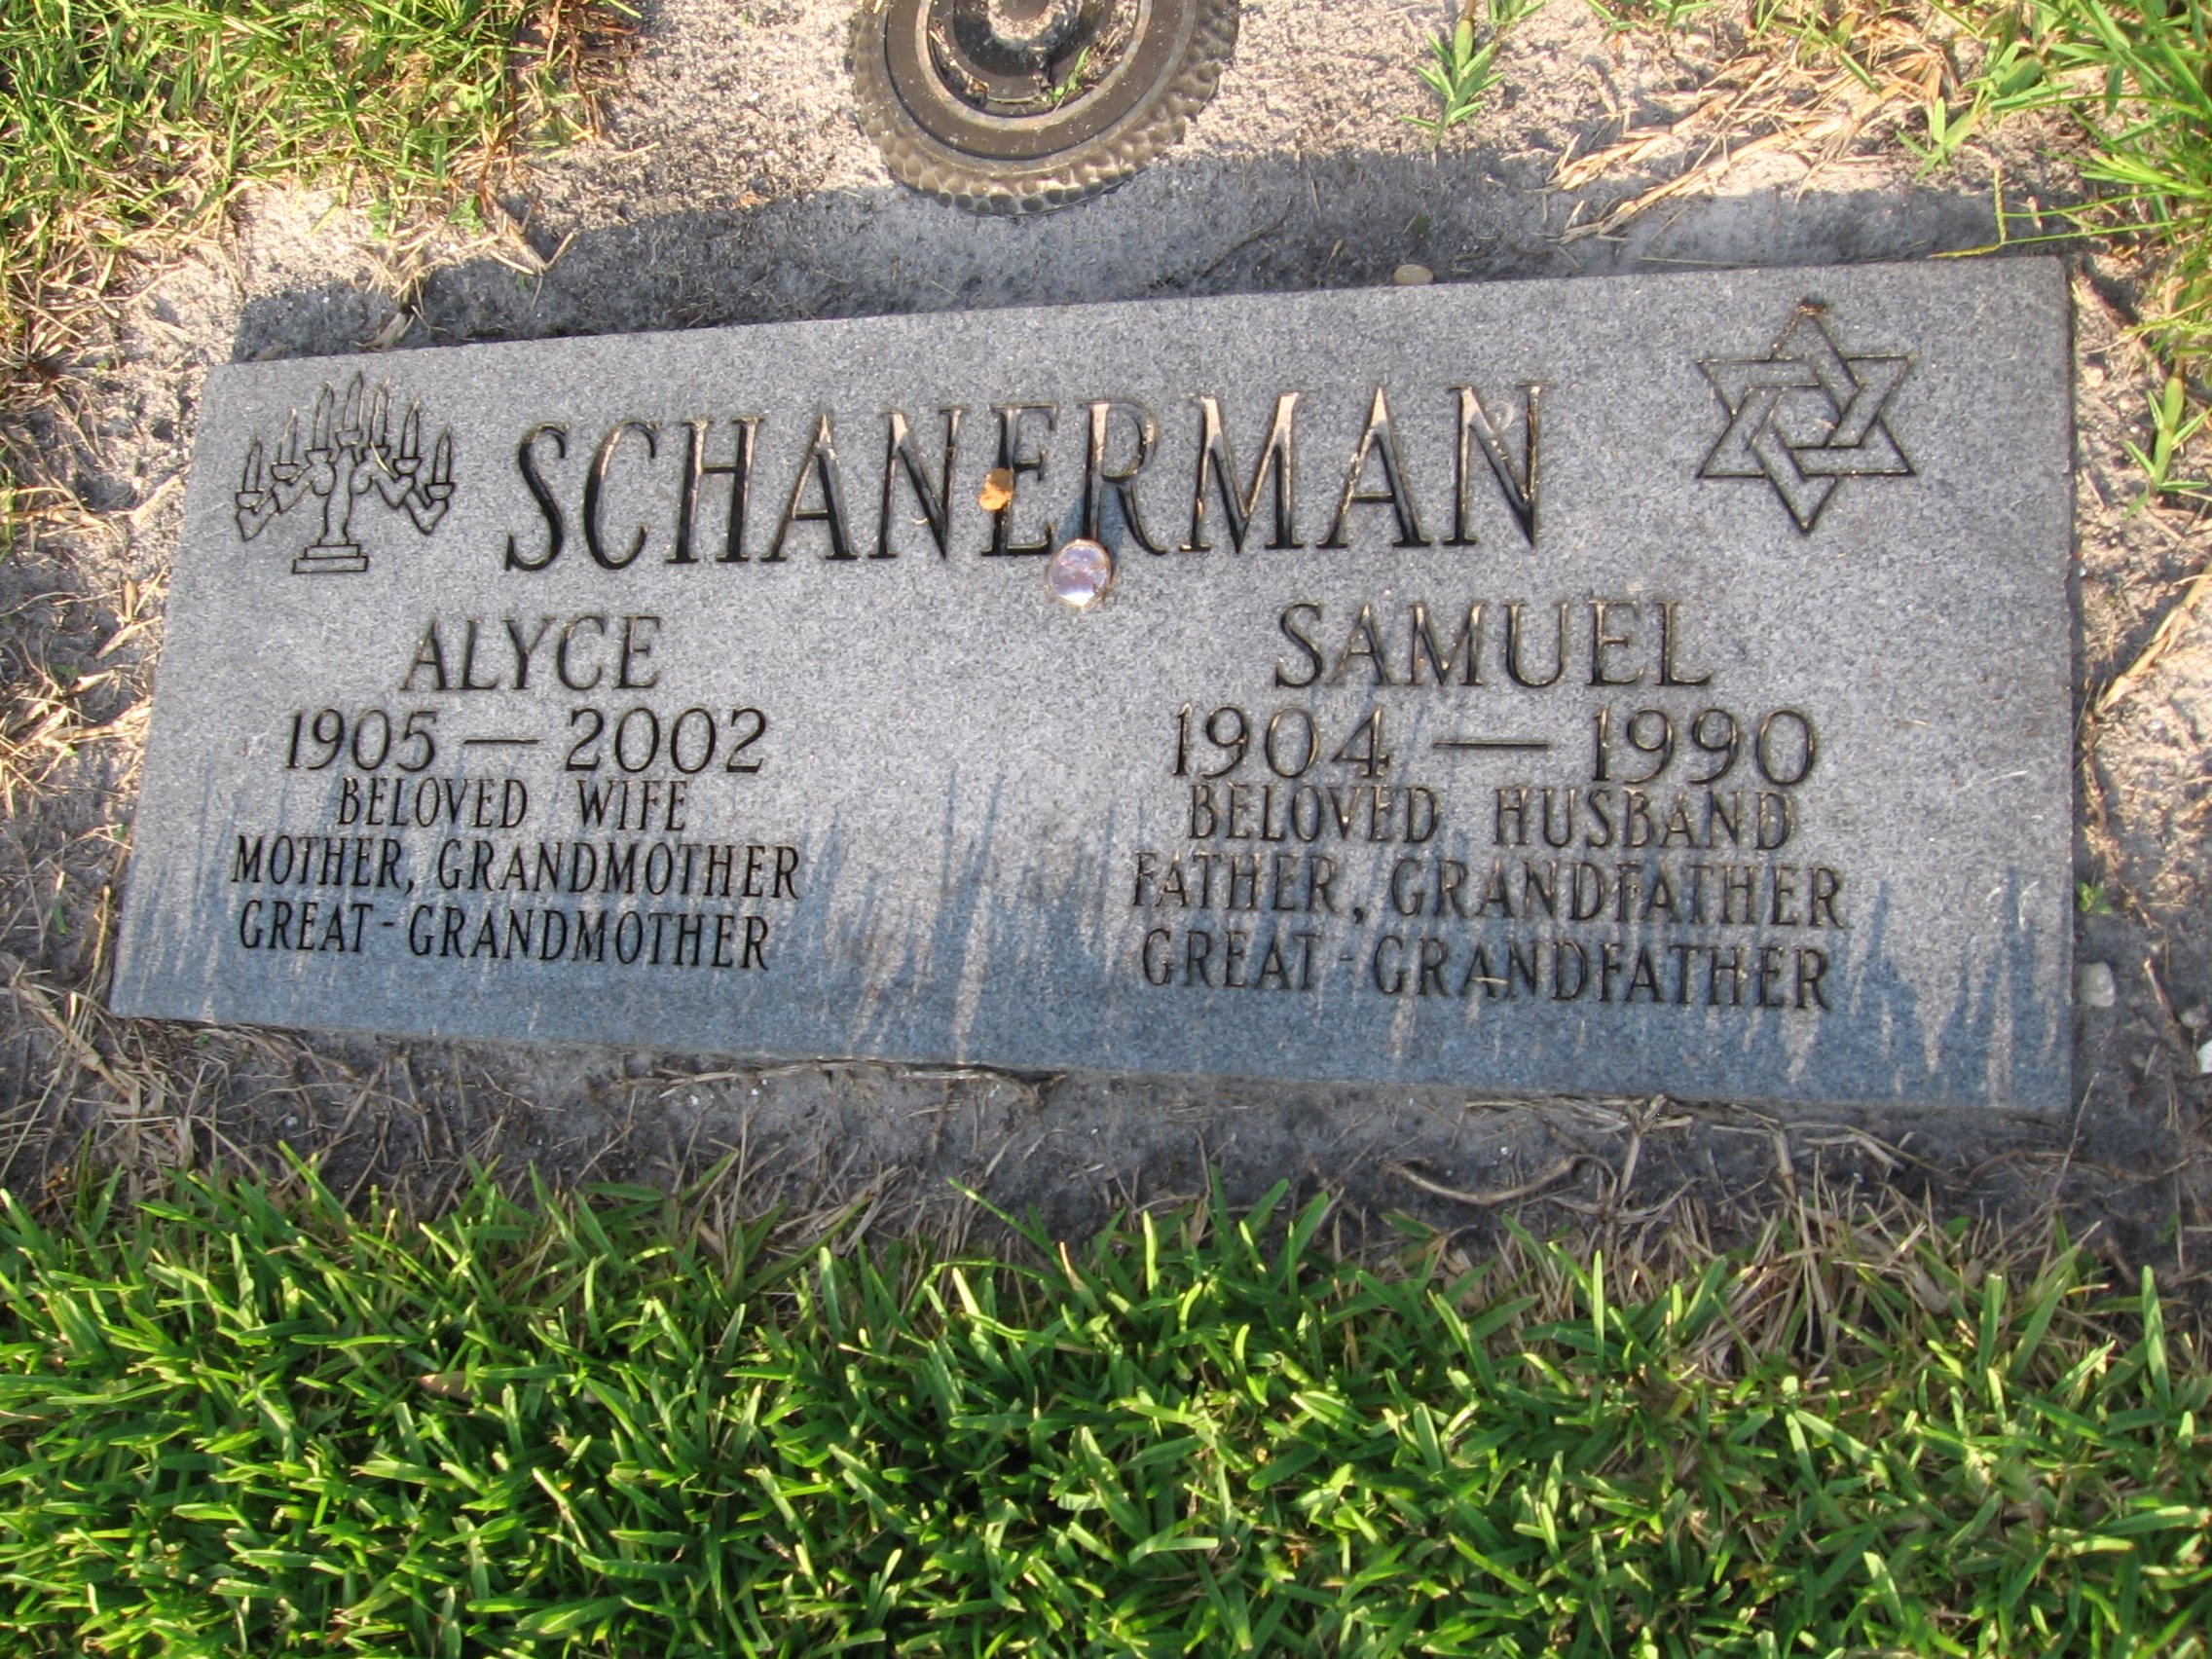 Alyce Schanerman